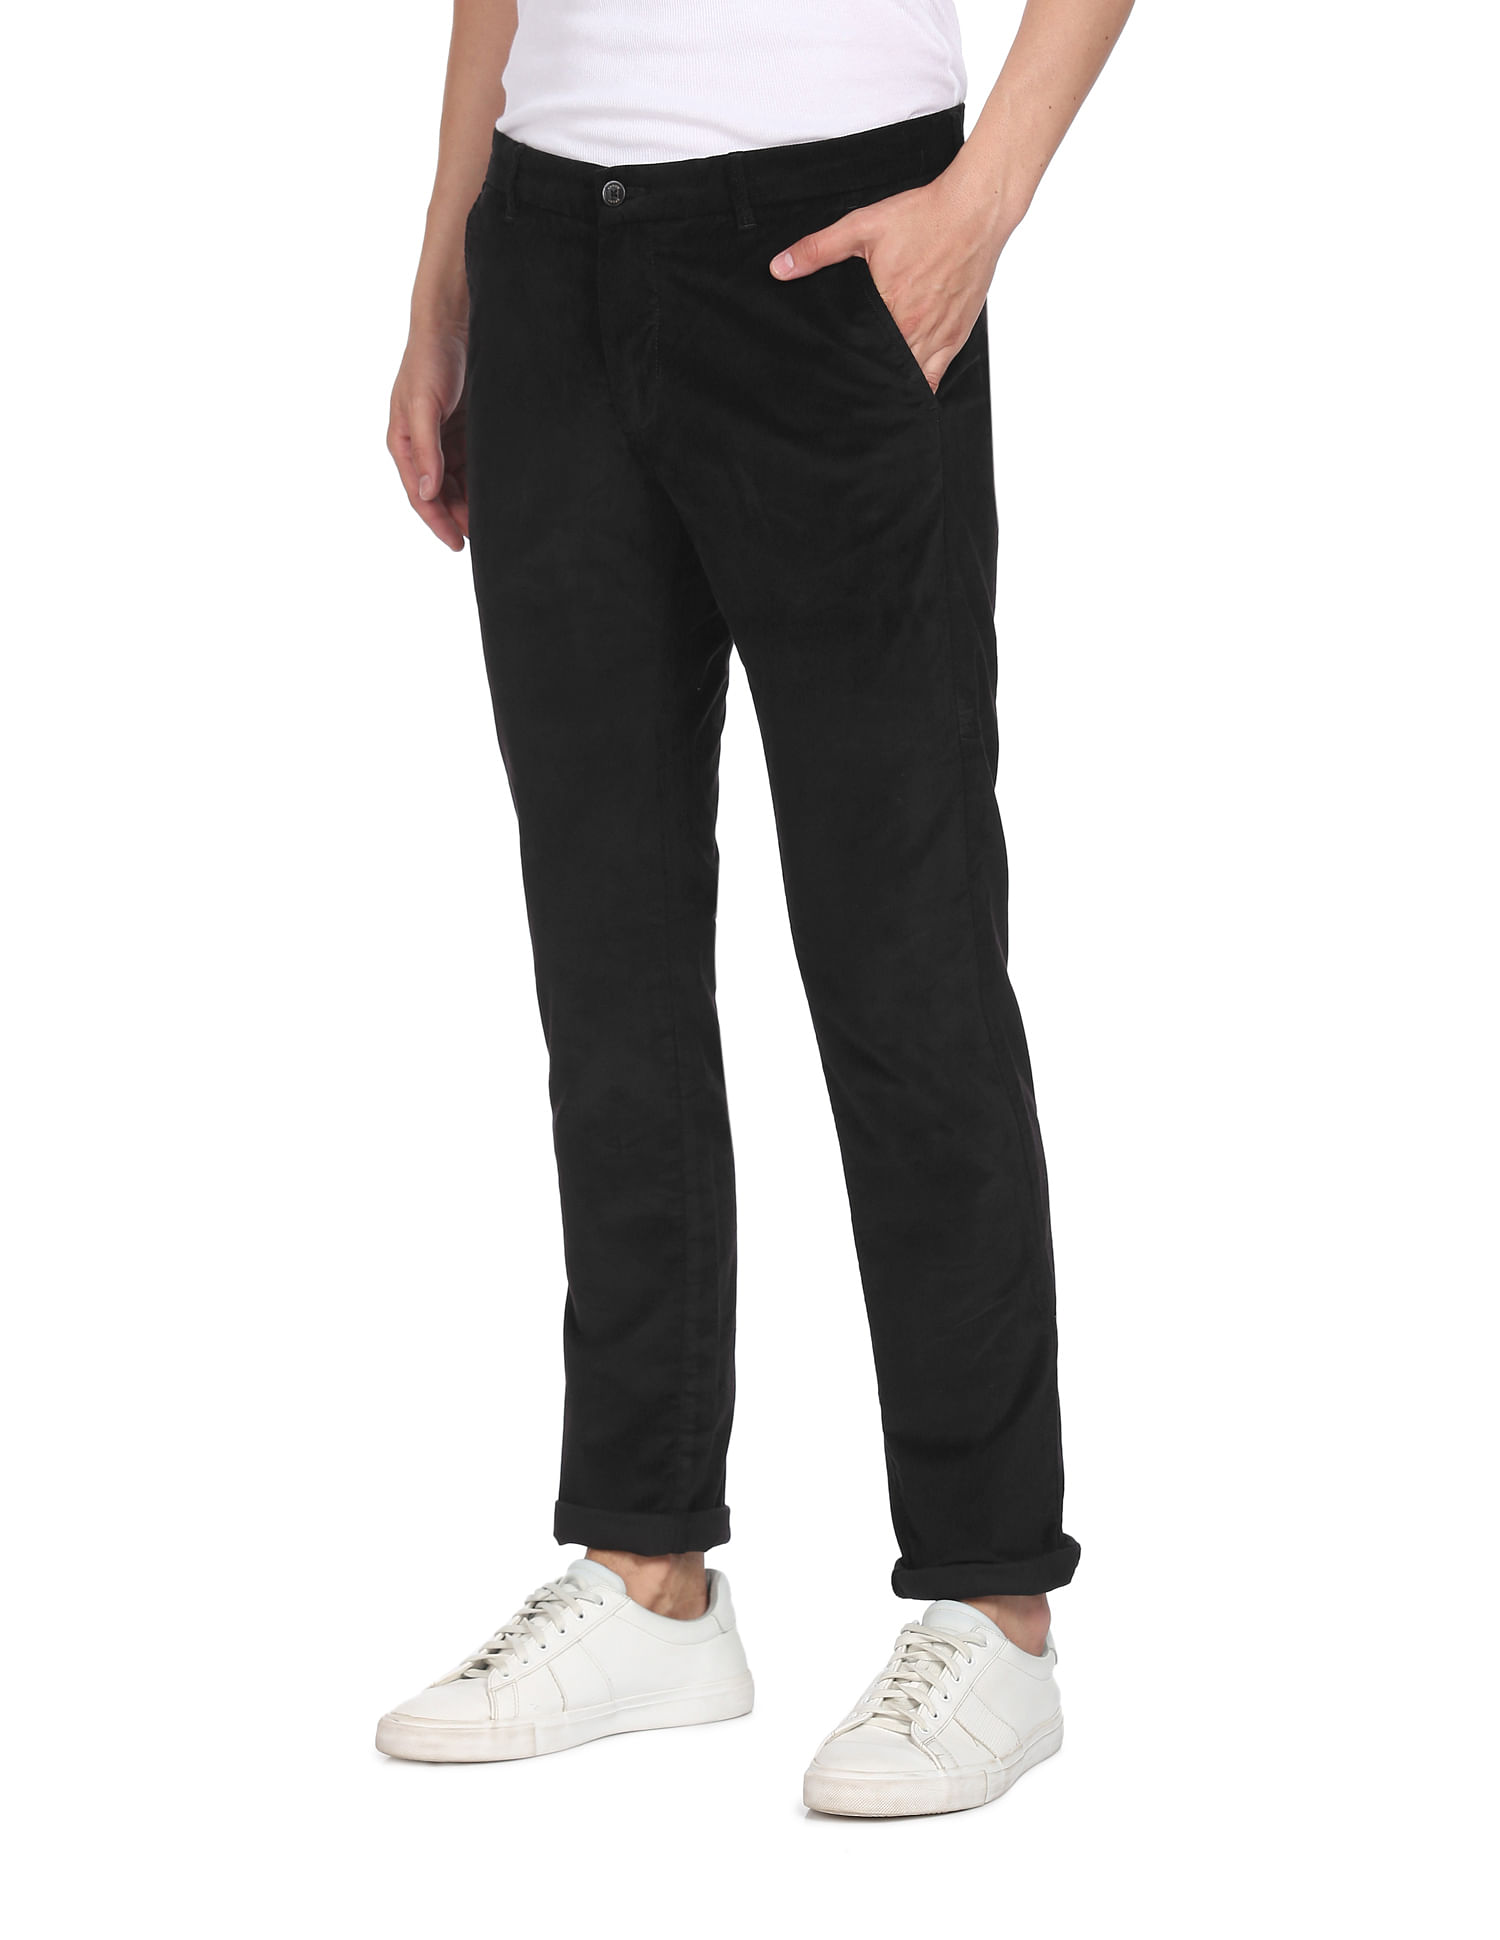 Flat Slim Fit Black Polyester Formal Trouser, Machine wash, Size: 30-40  Inch at Rs 349 in Bhilwara